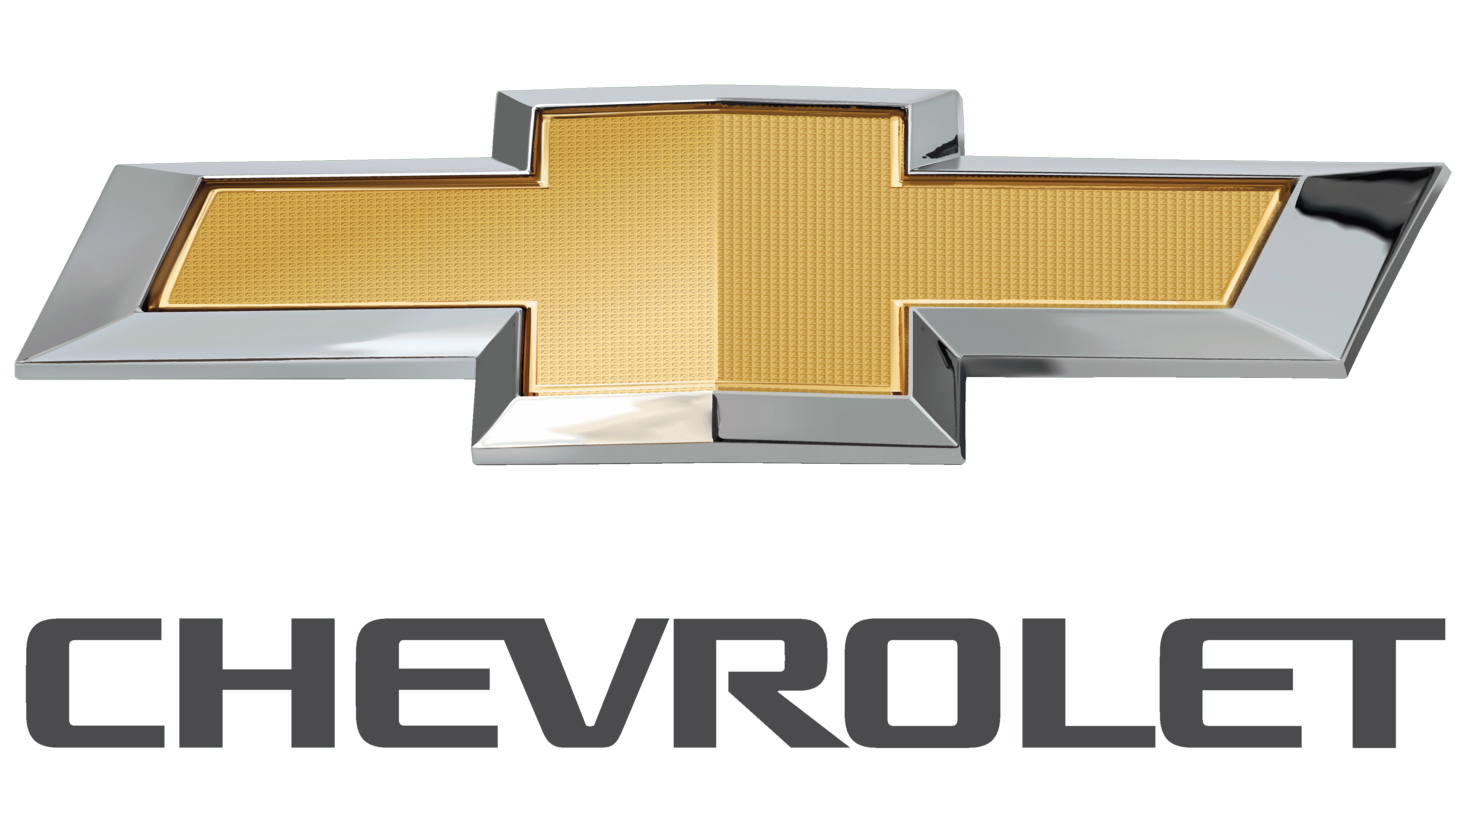 Chevrolet sign 2013 present